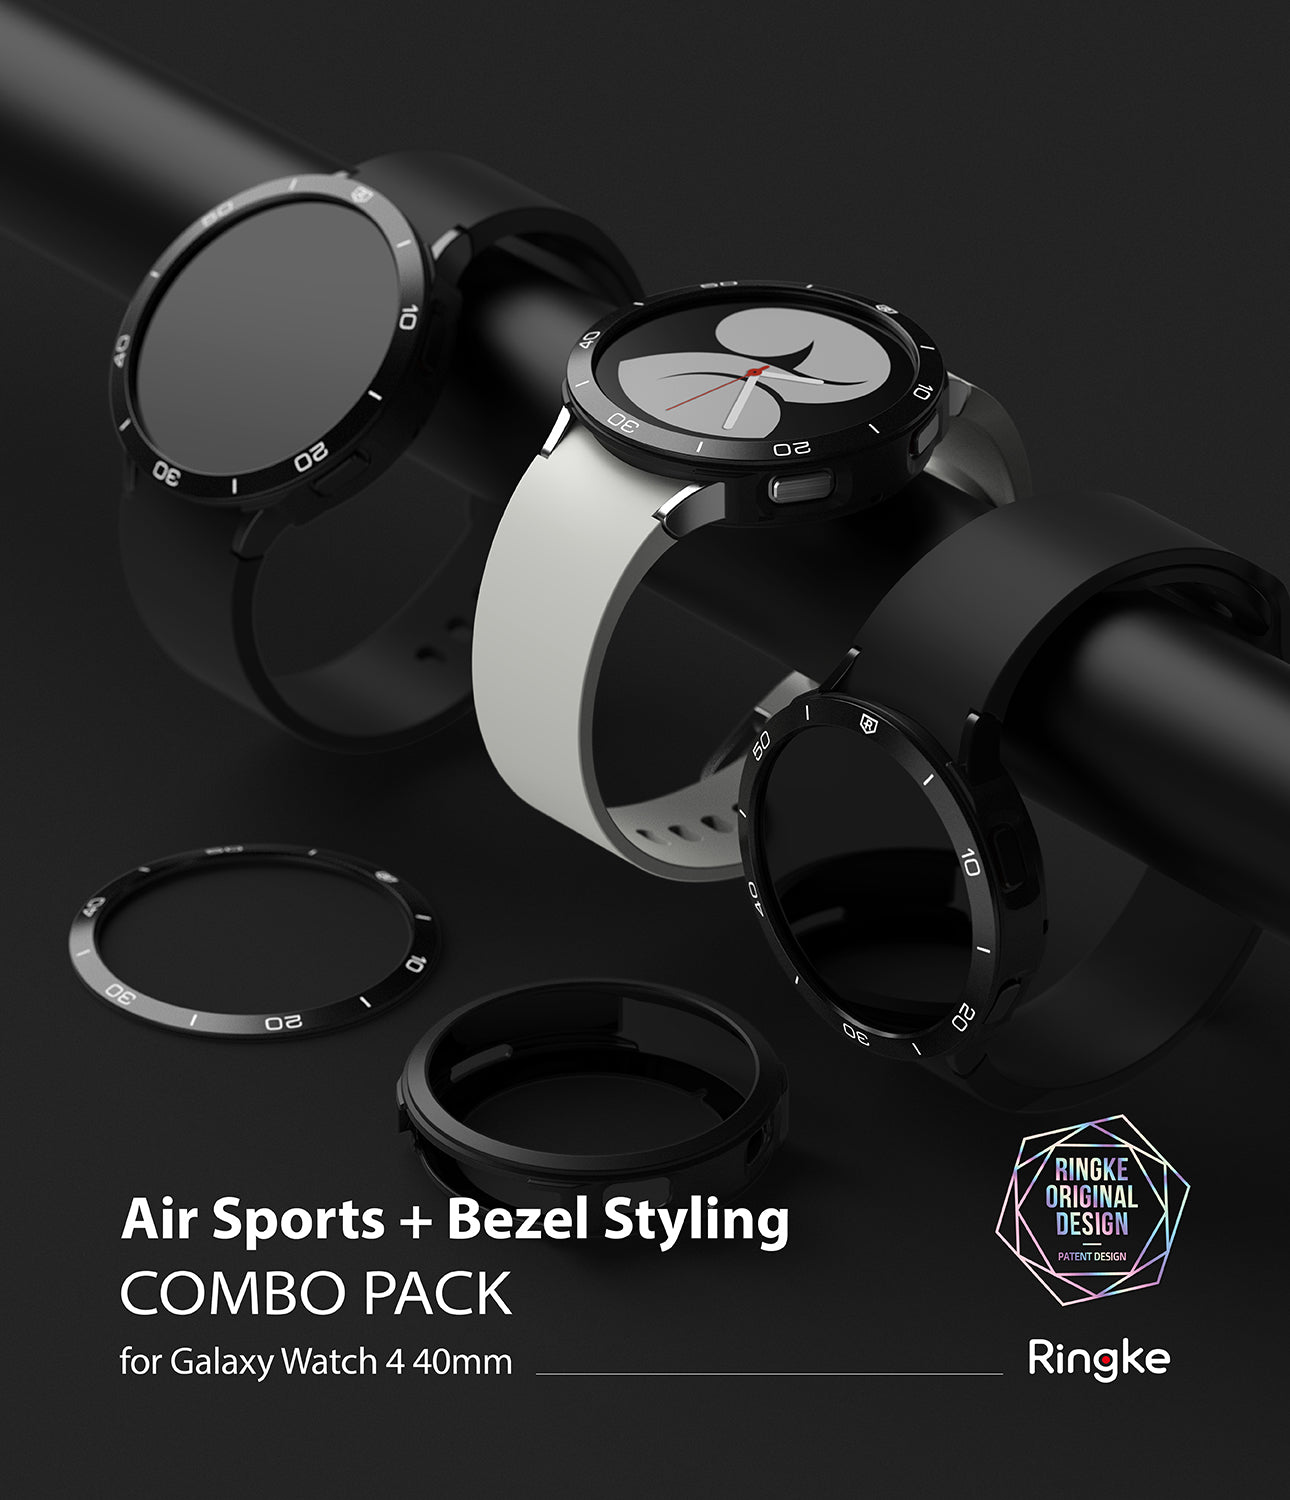 Galaxy Watch 4 40mm | Air Sports Black + Bezel Styling 11 Combo Pack